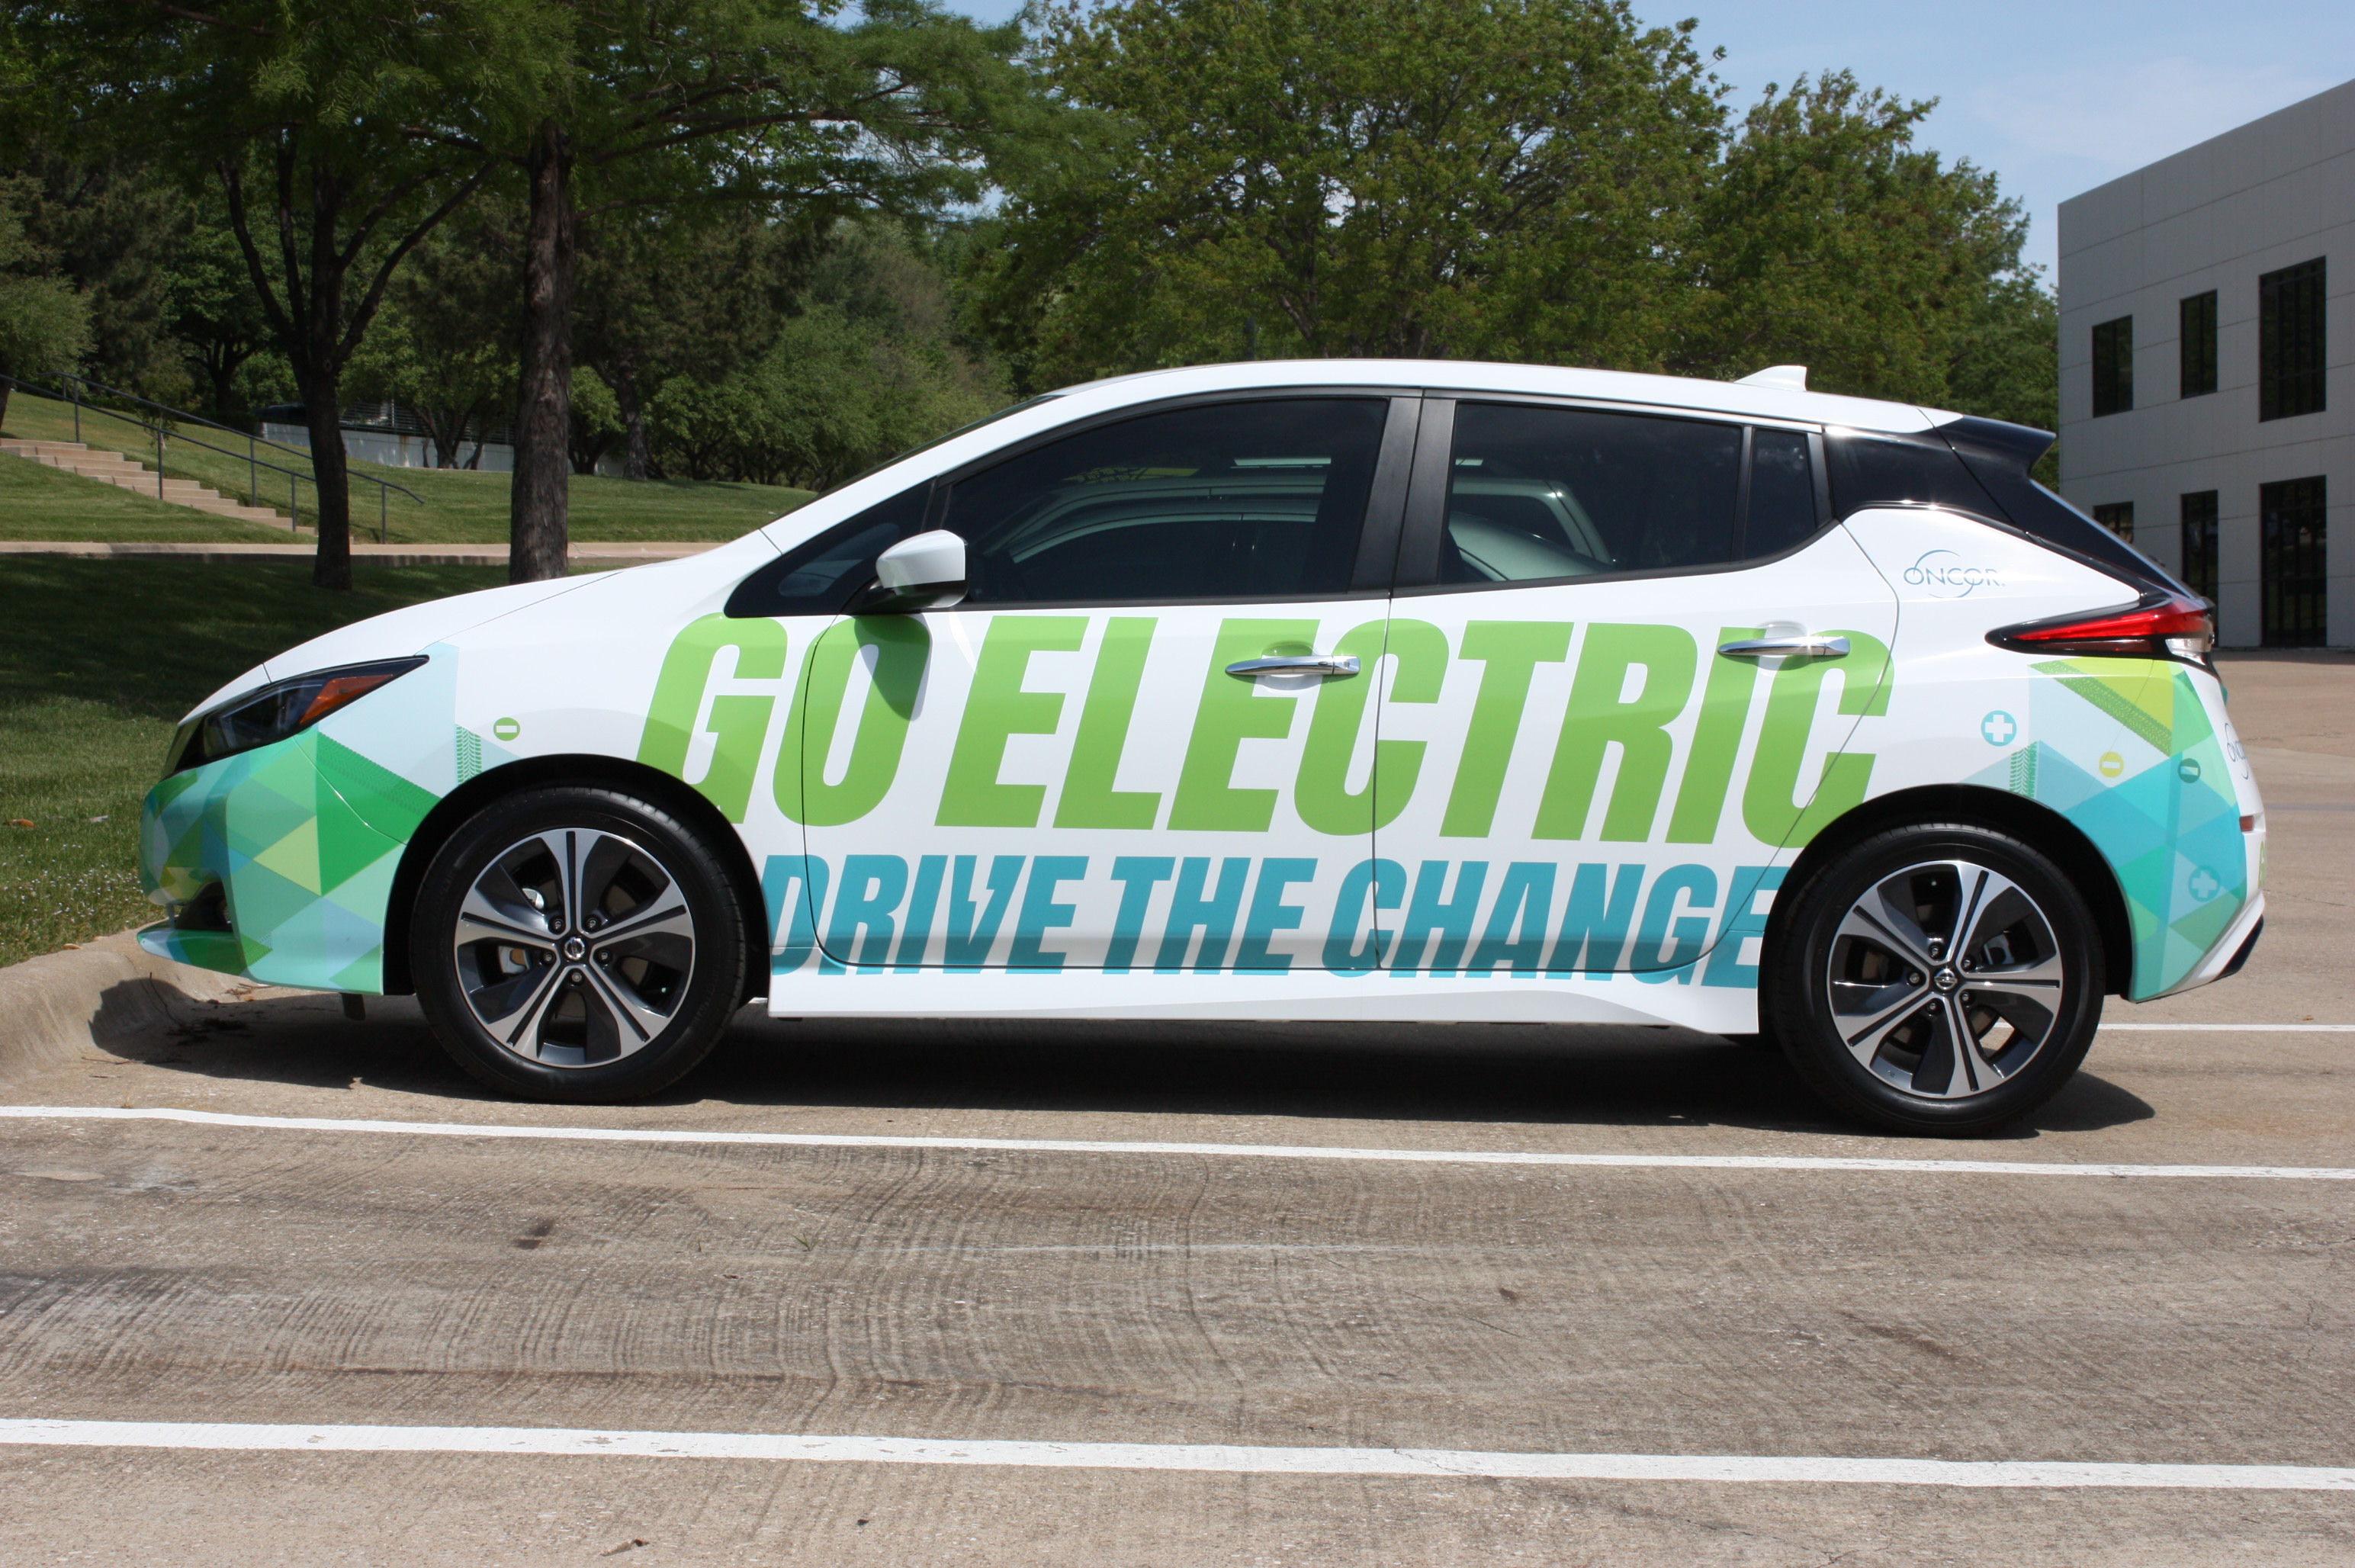 Go Electric vehicle wrap